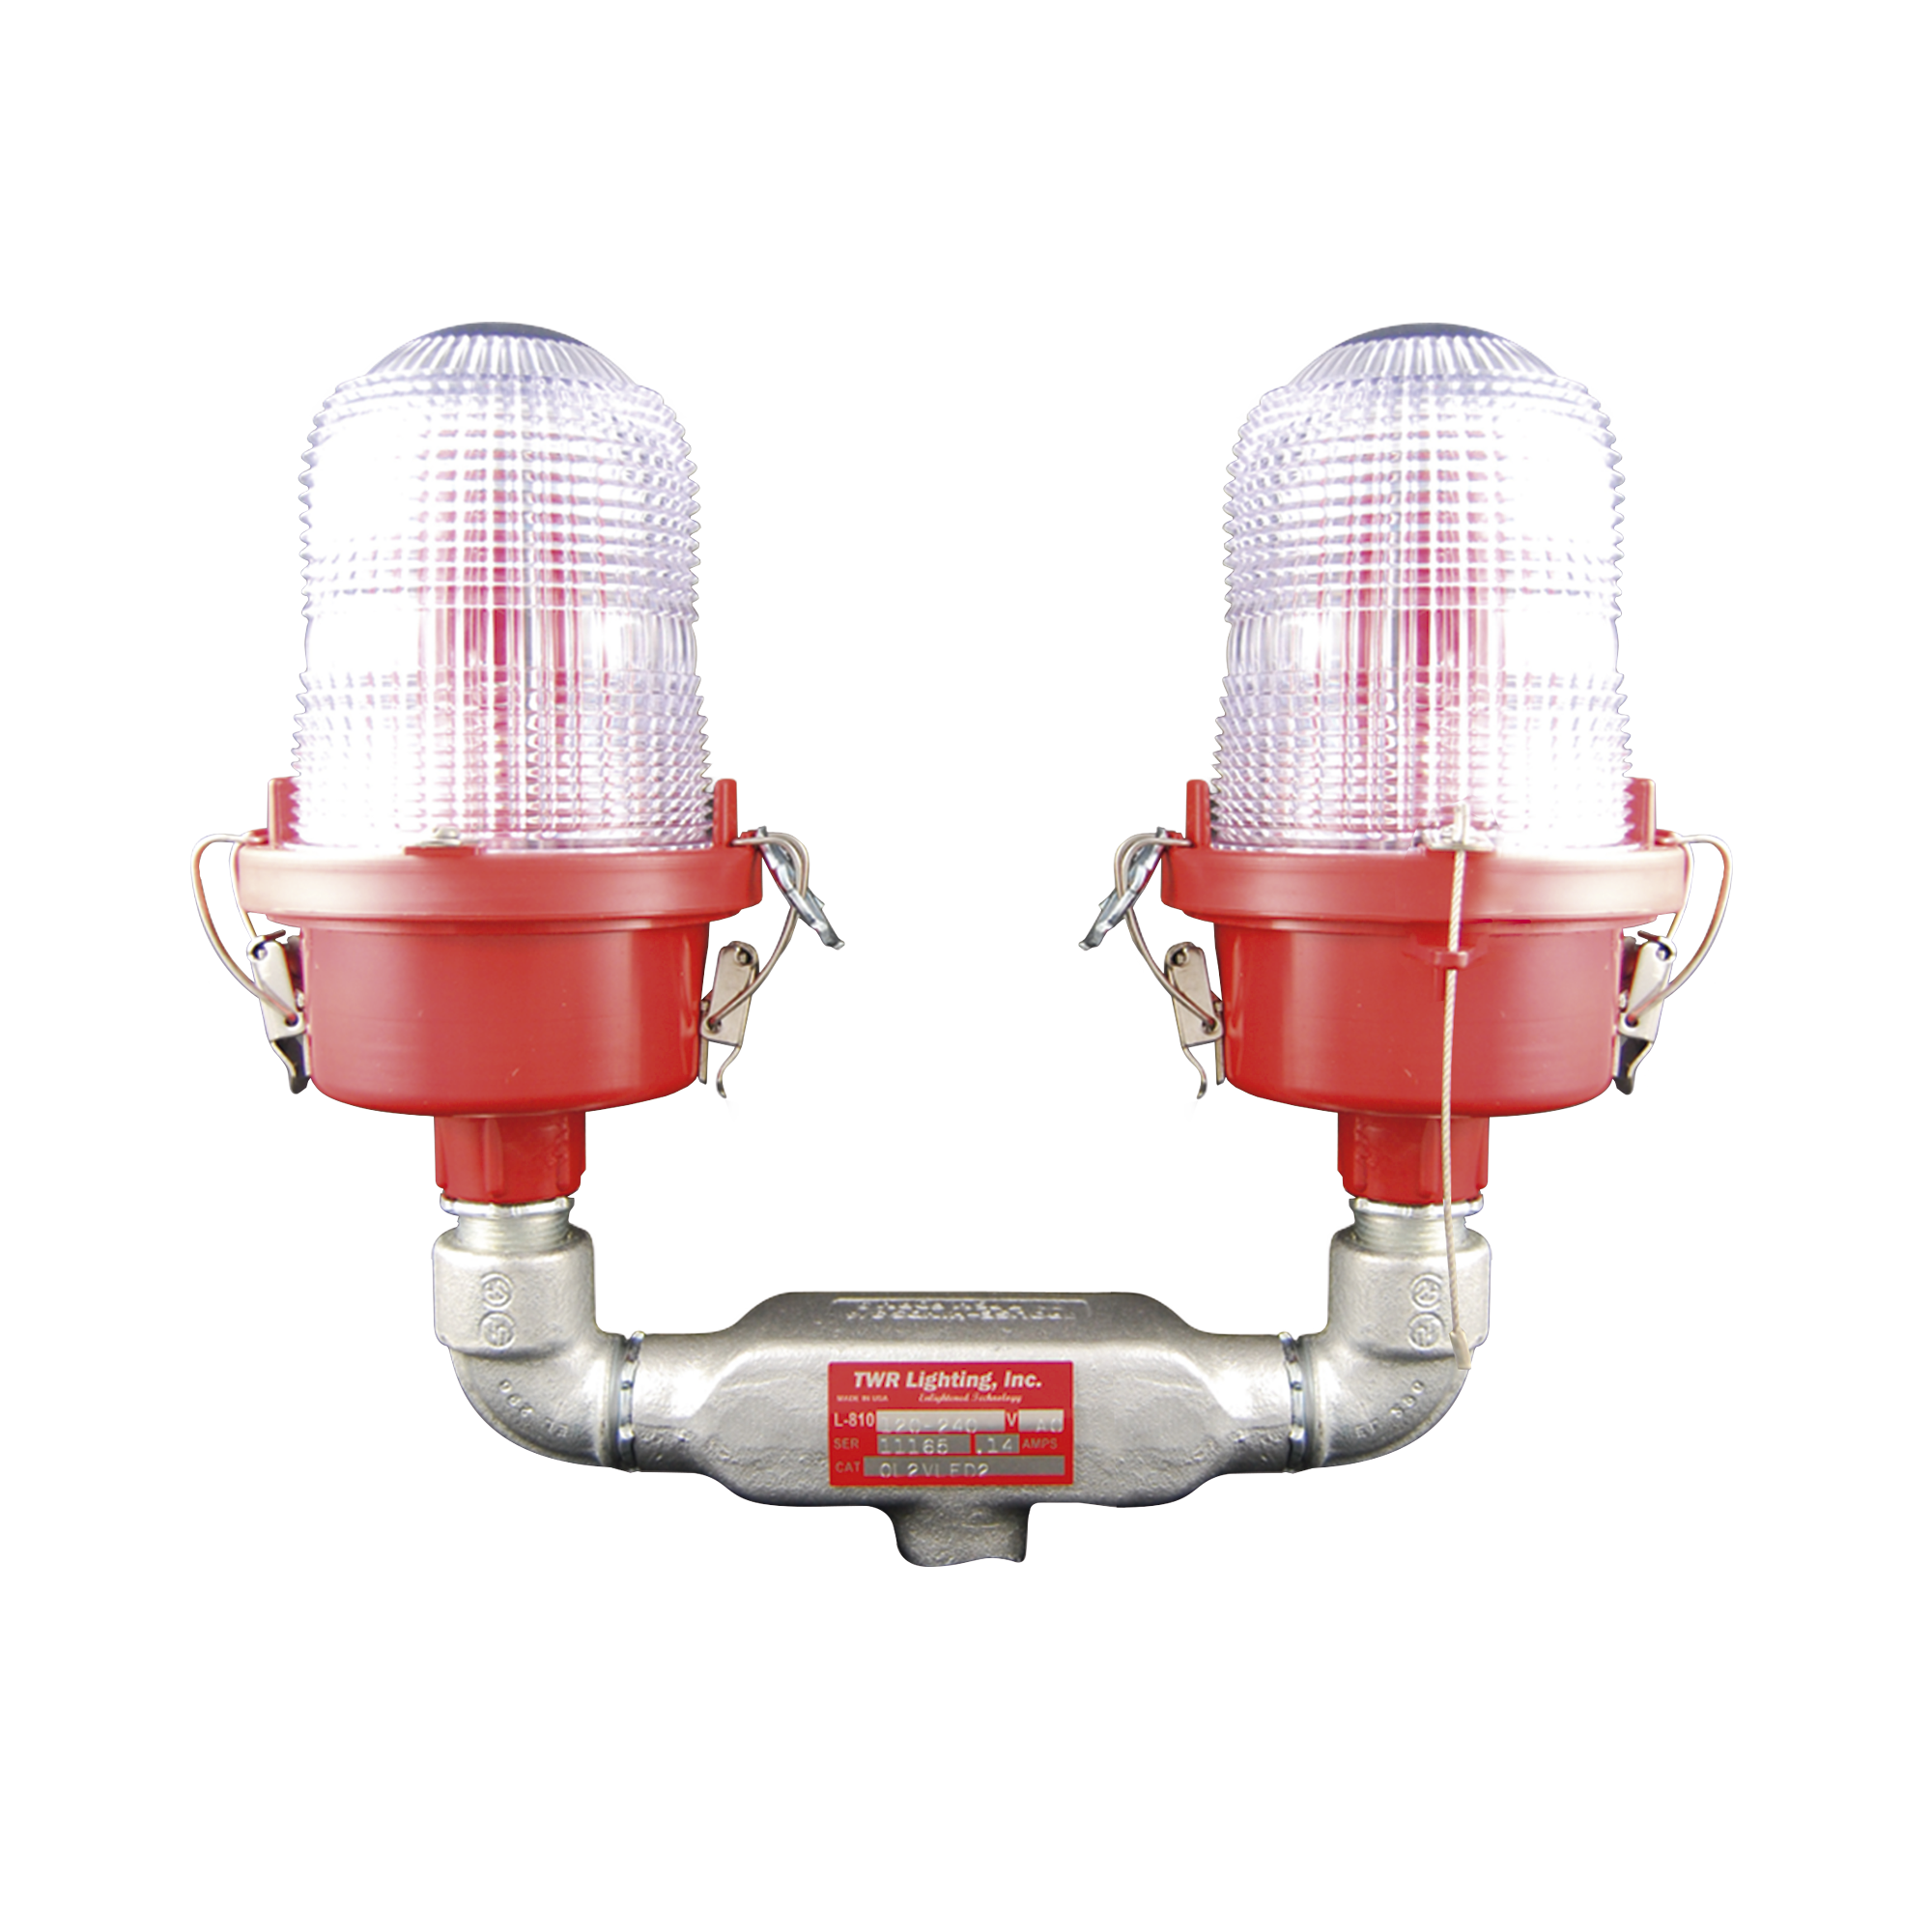 Lámpara de Obstrucción Roja Certificada/ Luz Fija Tipo L-810 Doble LED/ 120 - 240 Vca/ Luz Infraroja